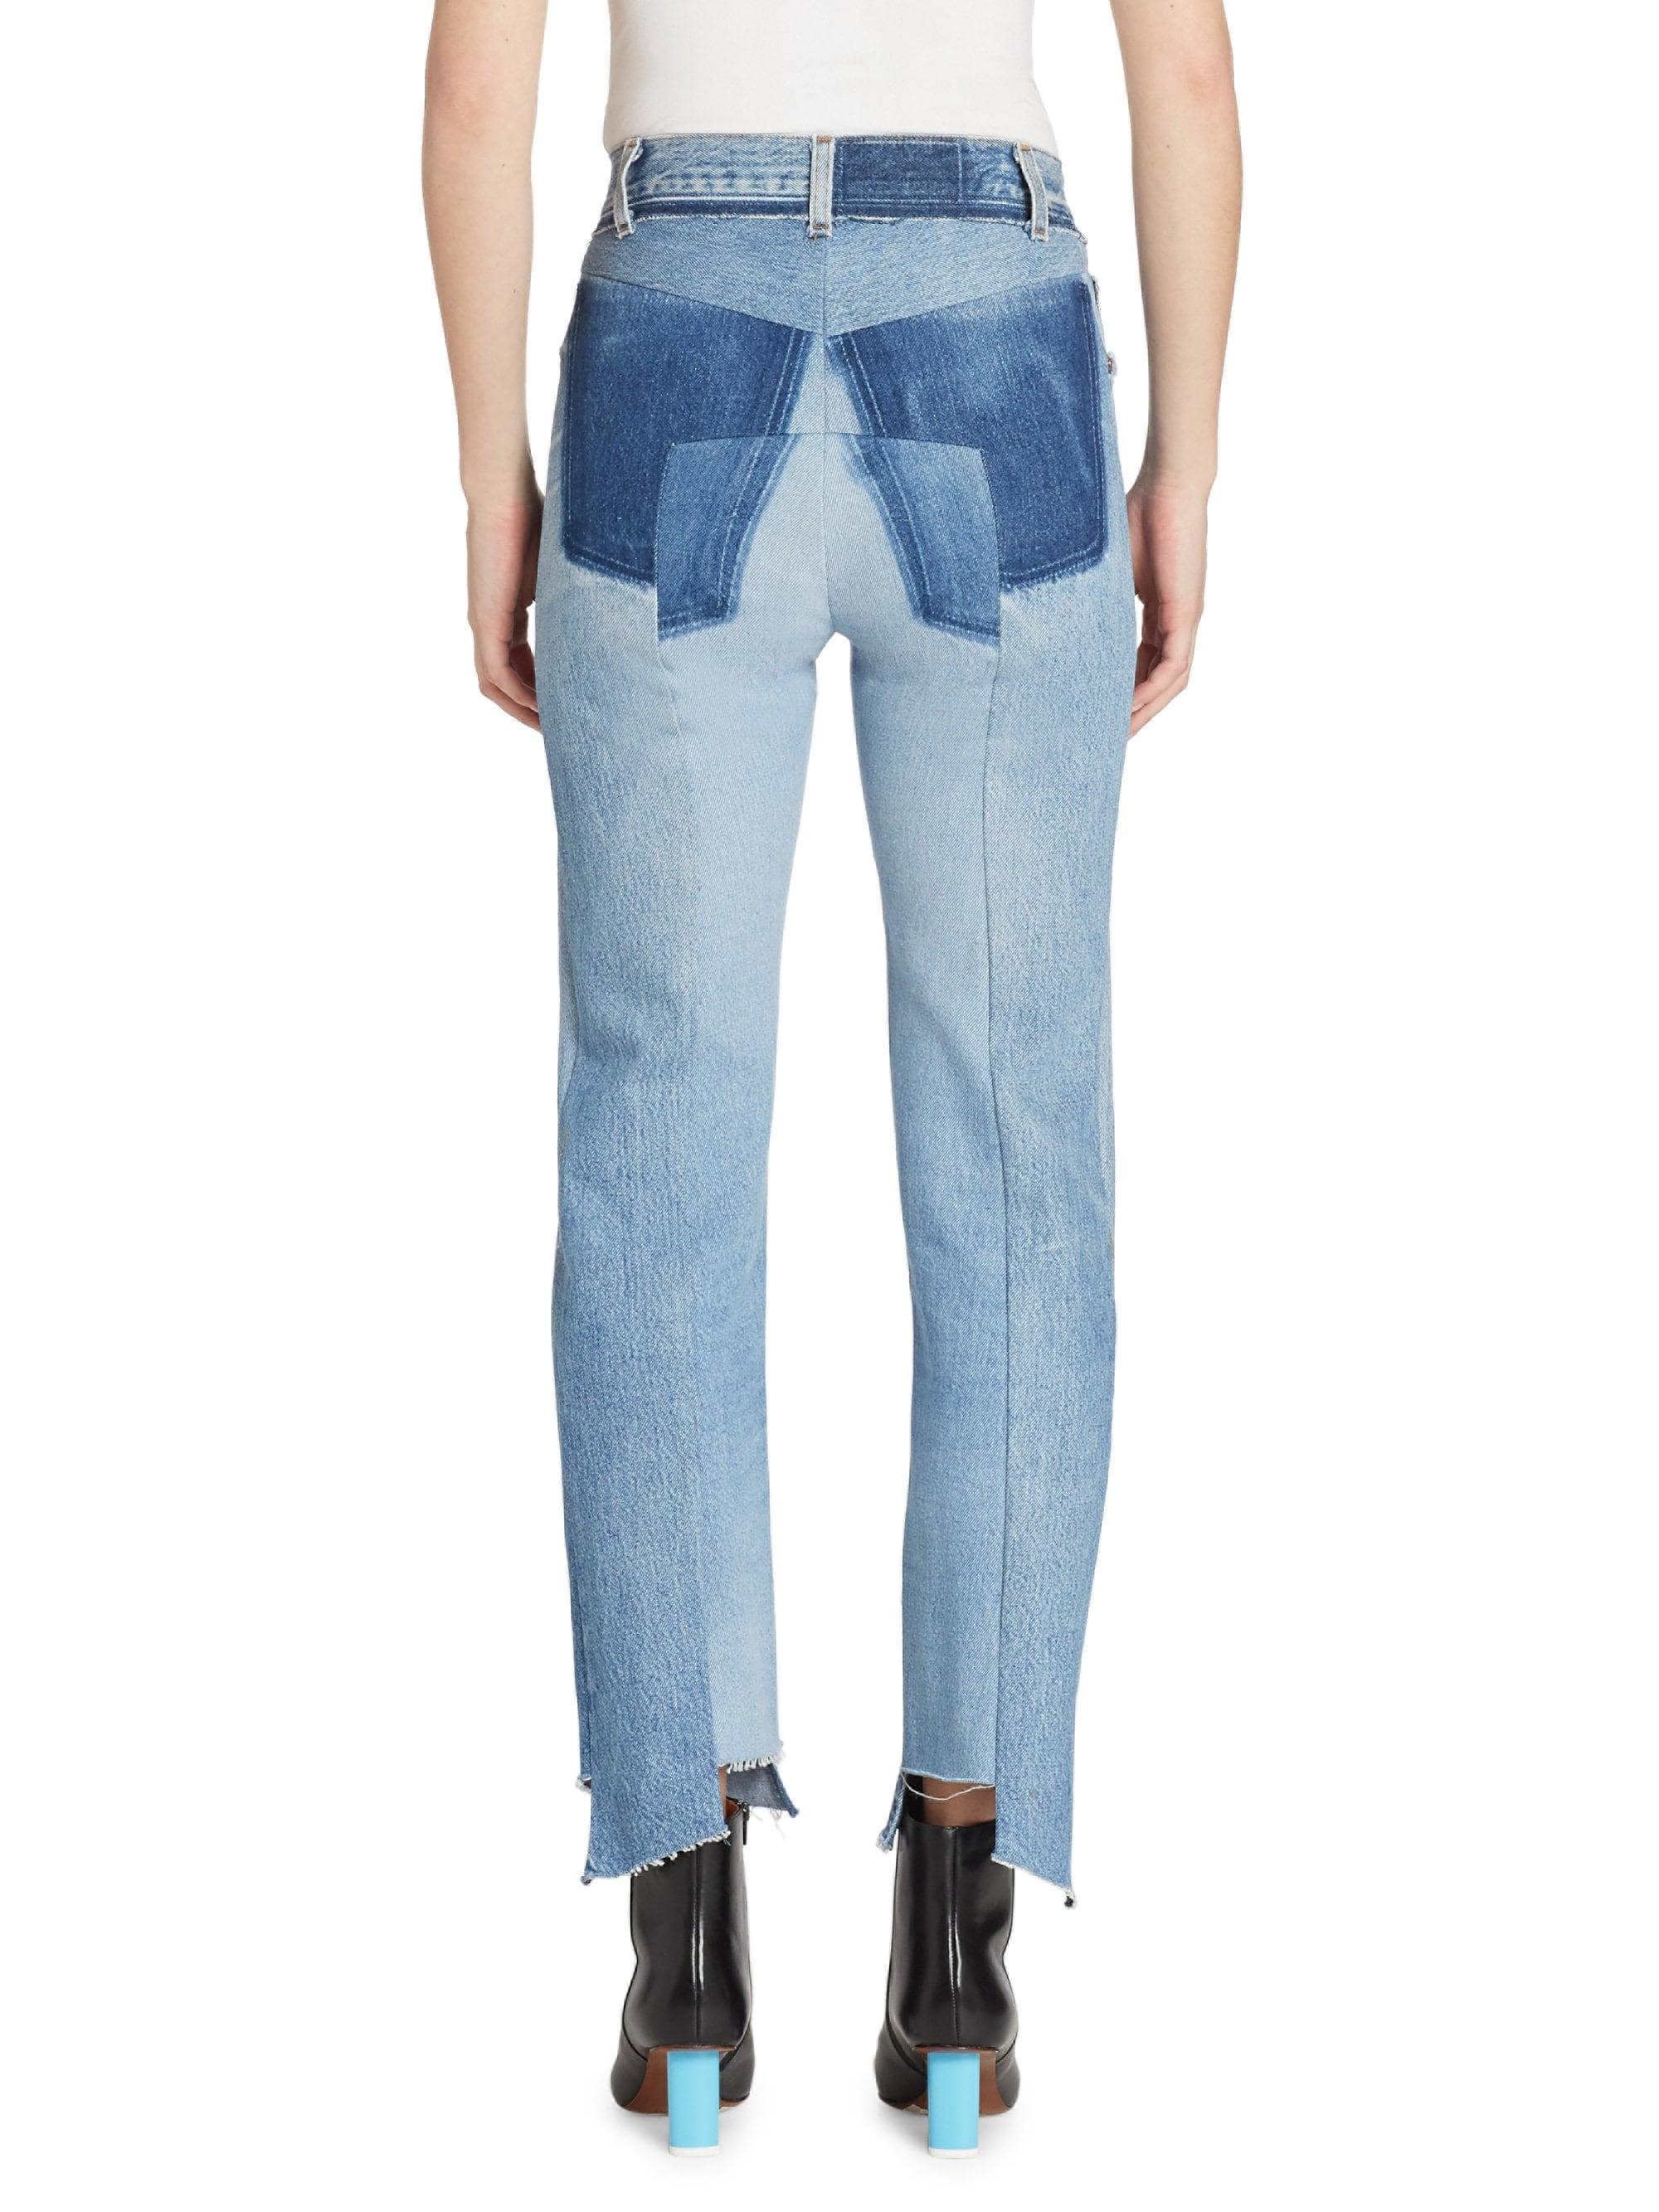 Vetements Denim Reworked Jeans in Blue - Lyst